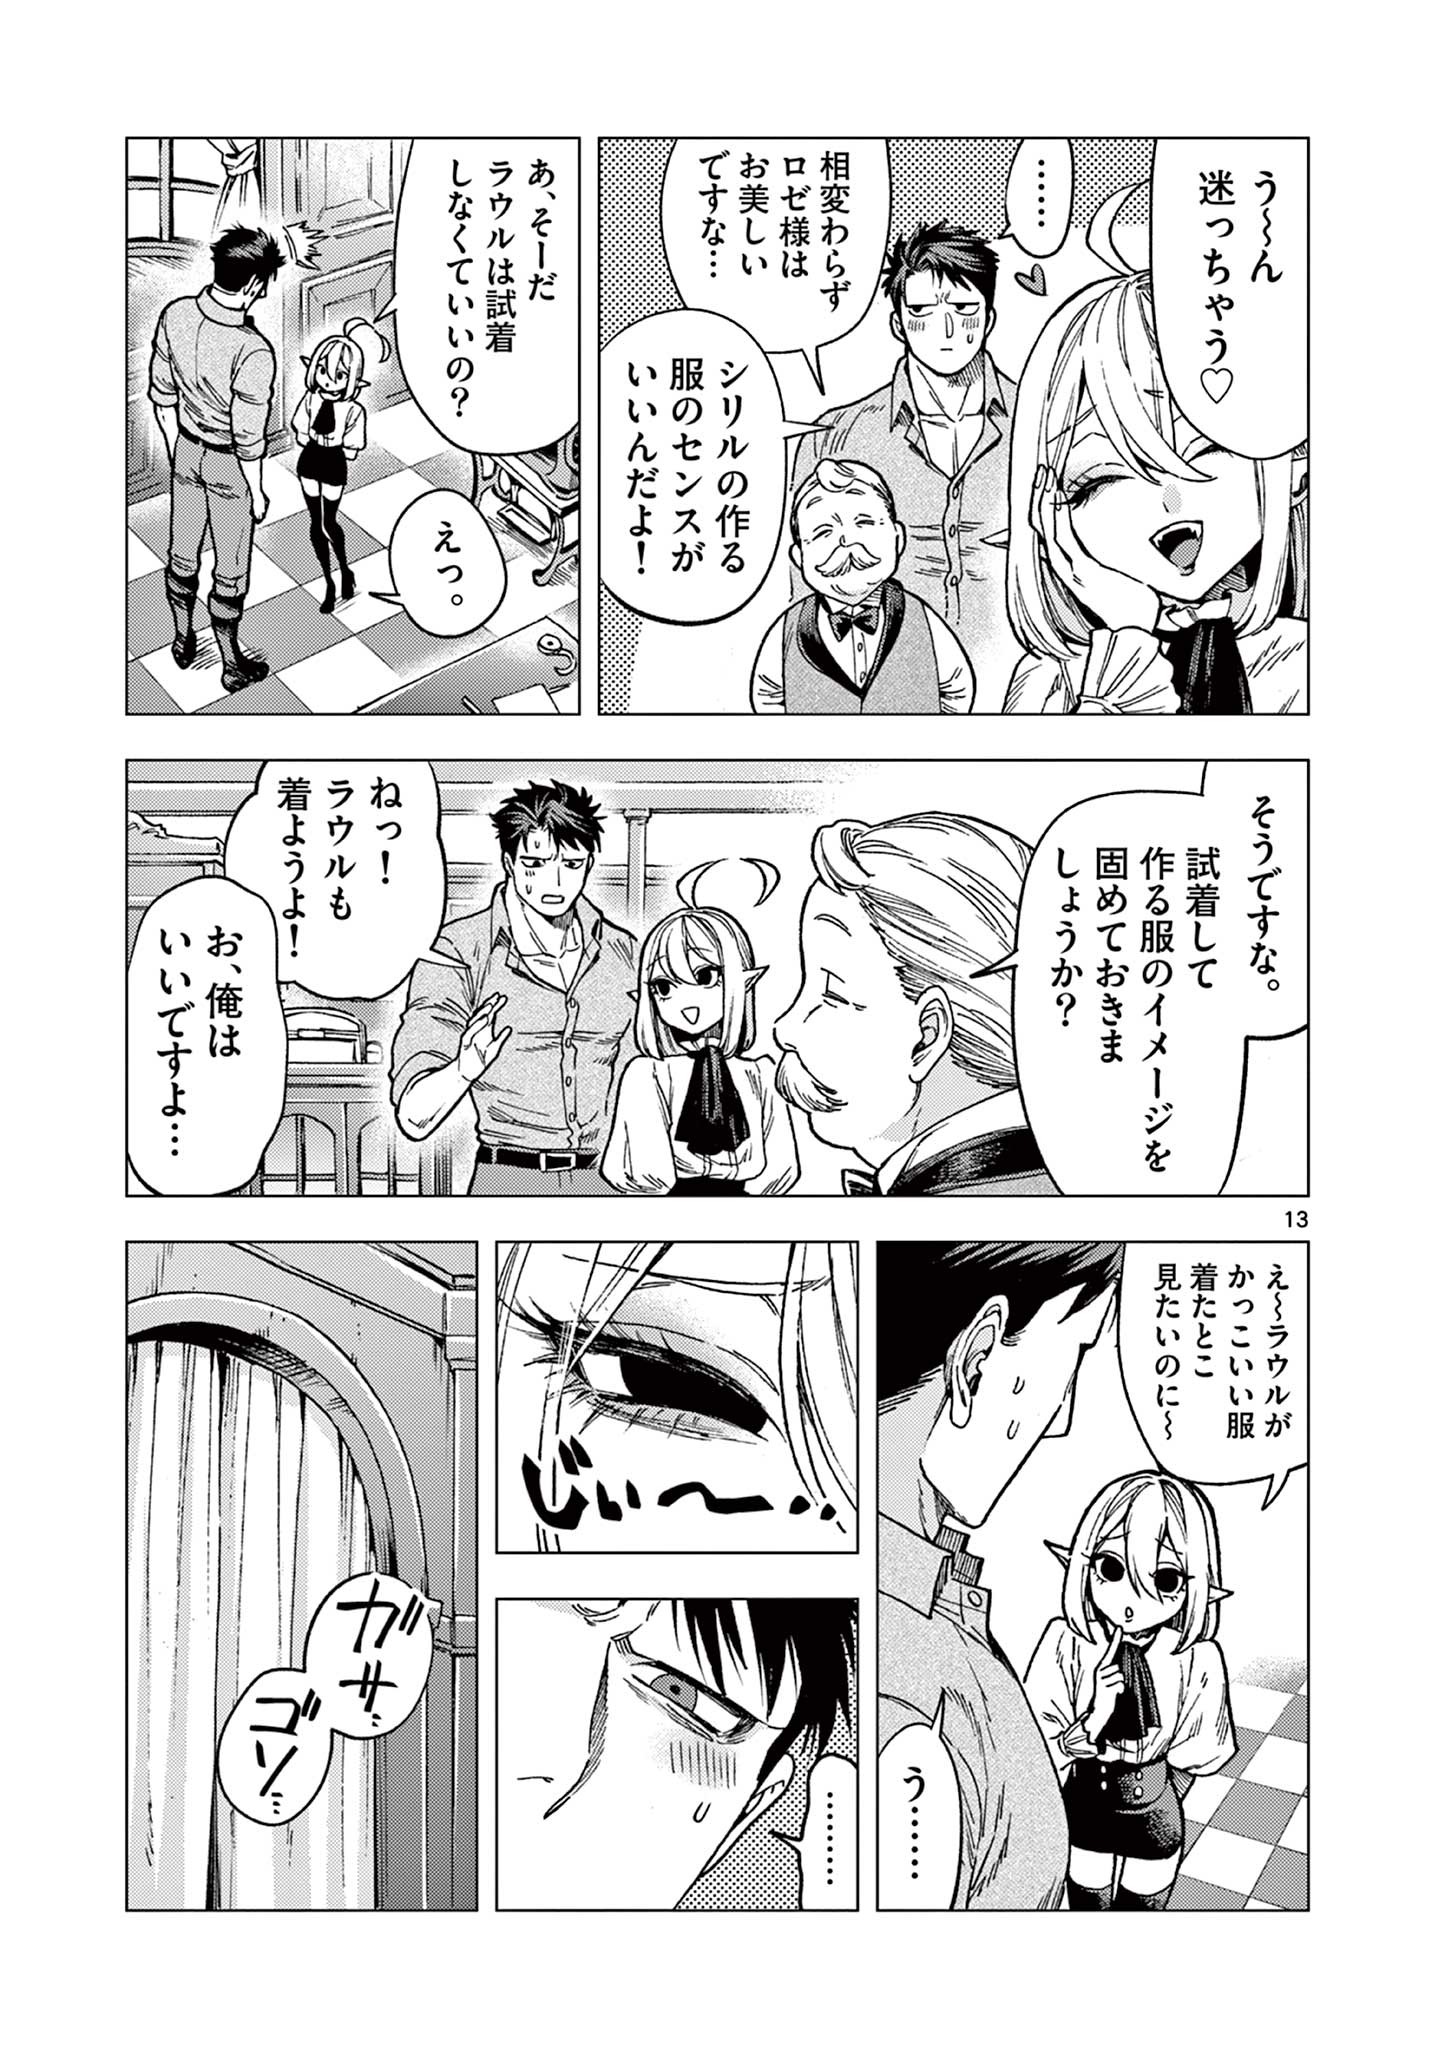 Raul to Kyuuketsuki - Chapter 3 - Page 13